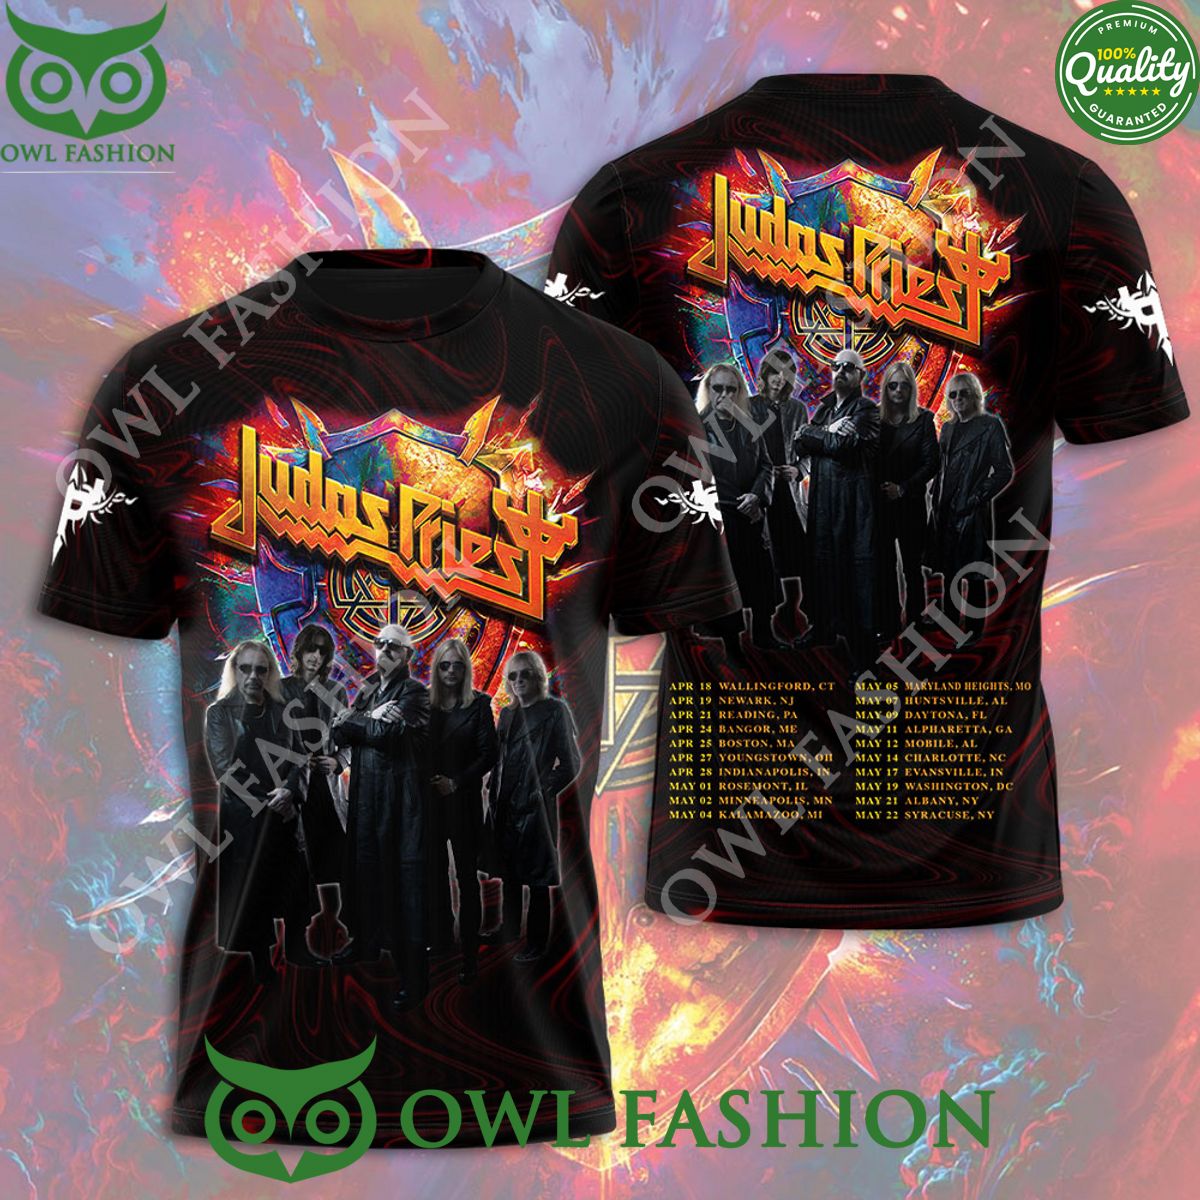 judas priest band world tour 3d t shirt 1 t1gvs.jpg